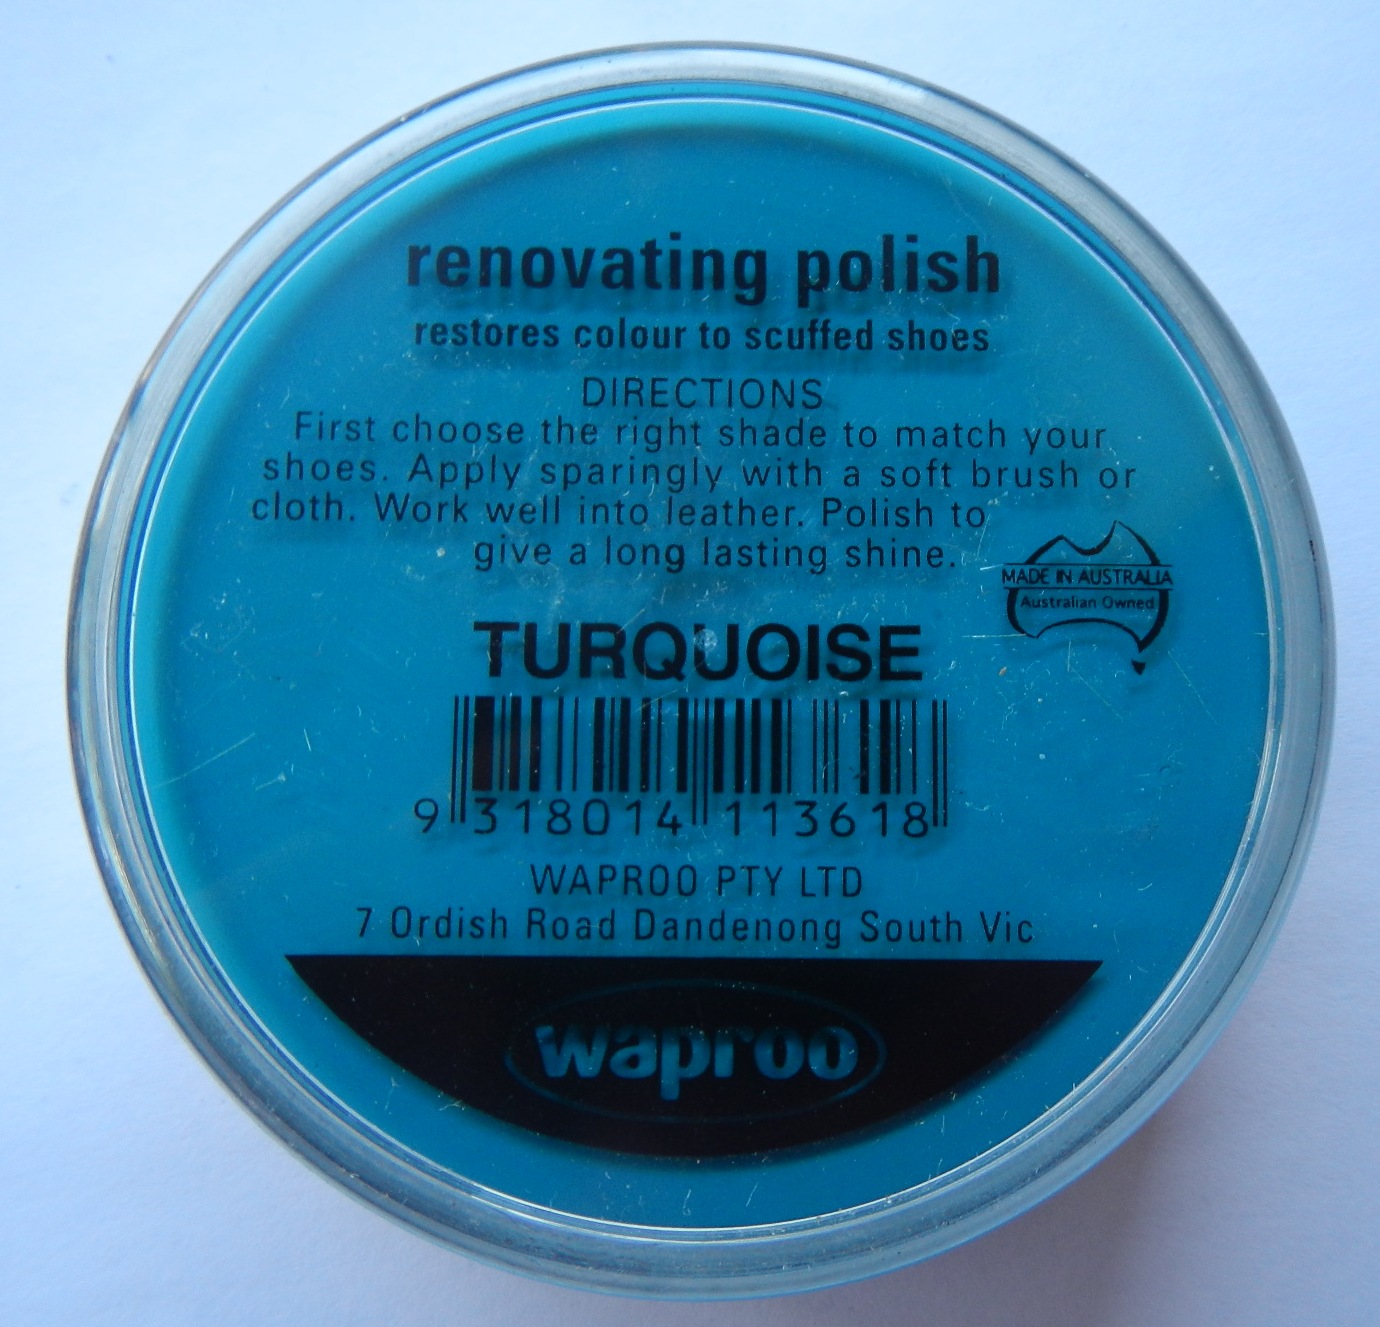 Turquoise renovating polish